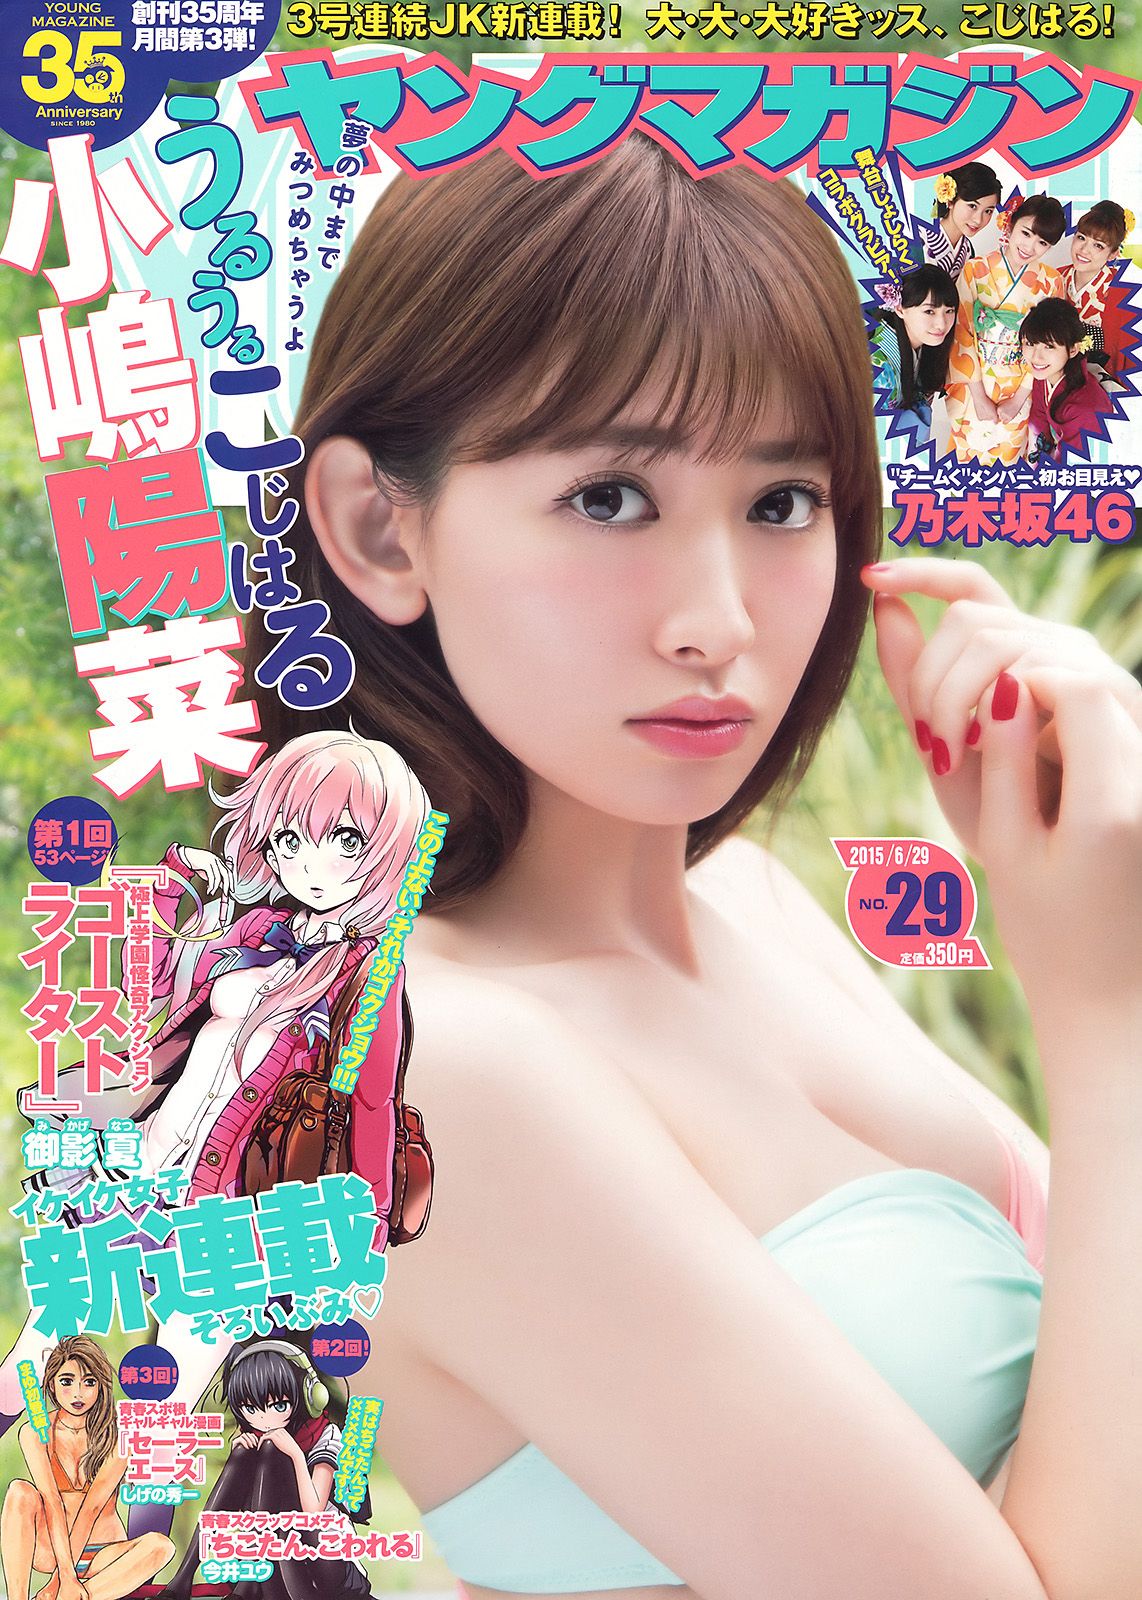 [Young Magazine] 2015.06 No.29 小嶋陽菜 乃木坂460